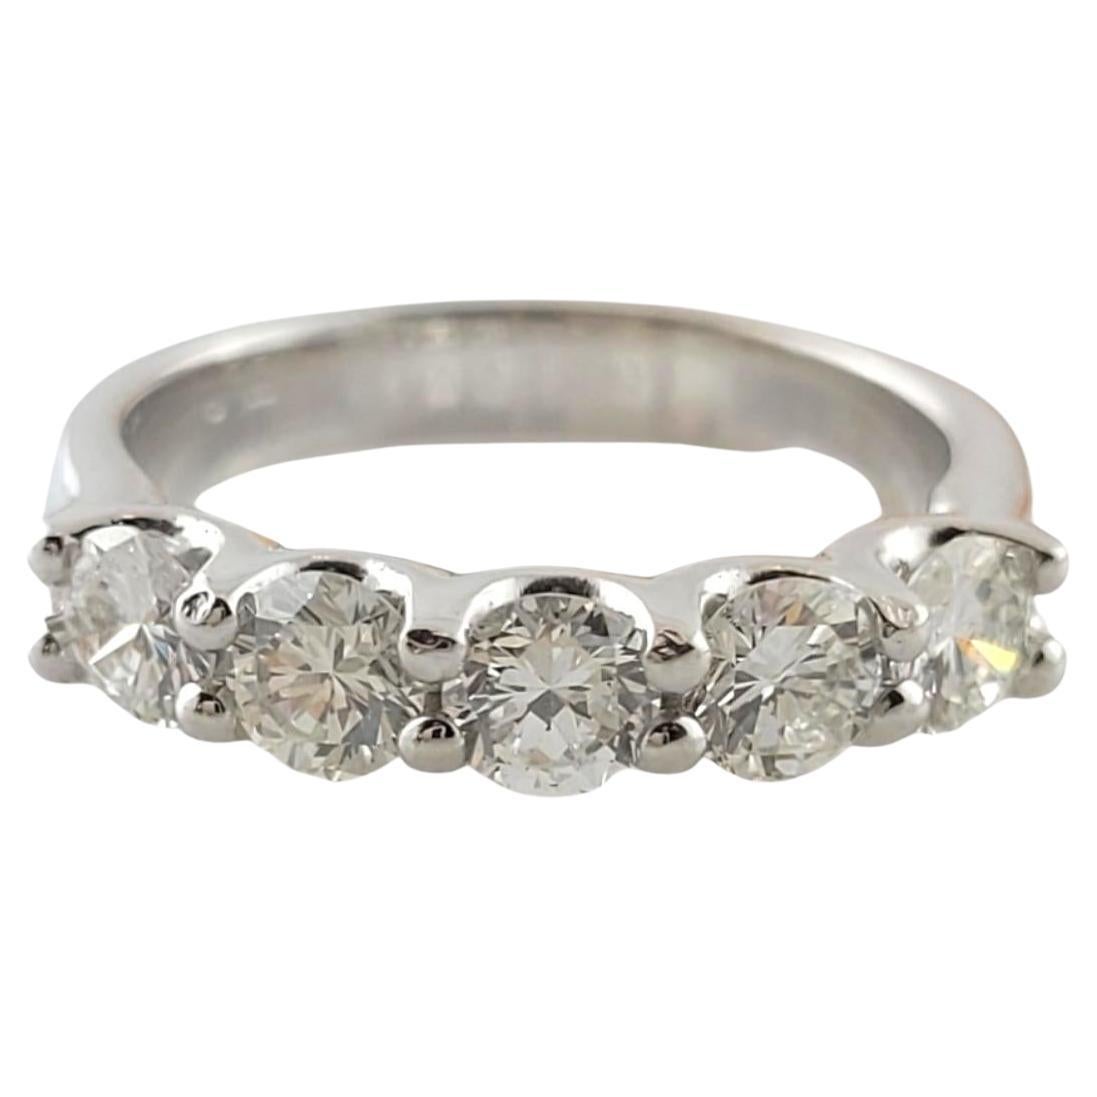 14K White Gold and Diamond Wedding Anniversary Band Ring Size 6.75 #16983